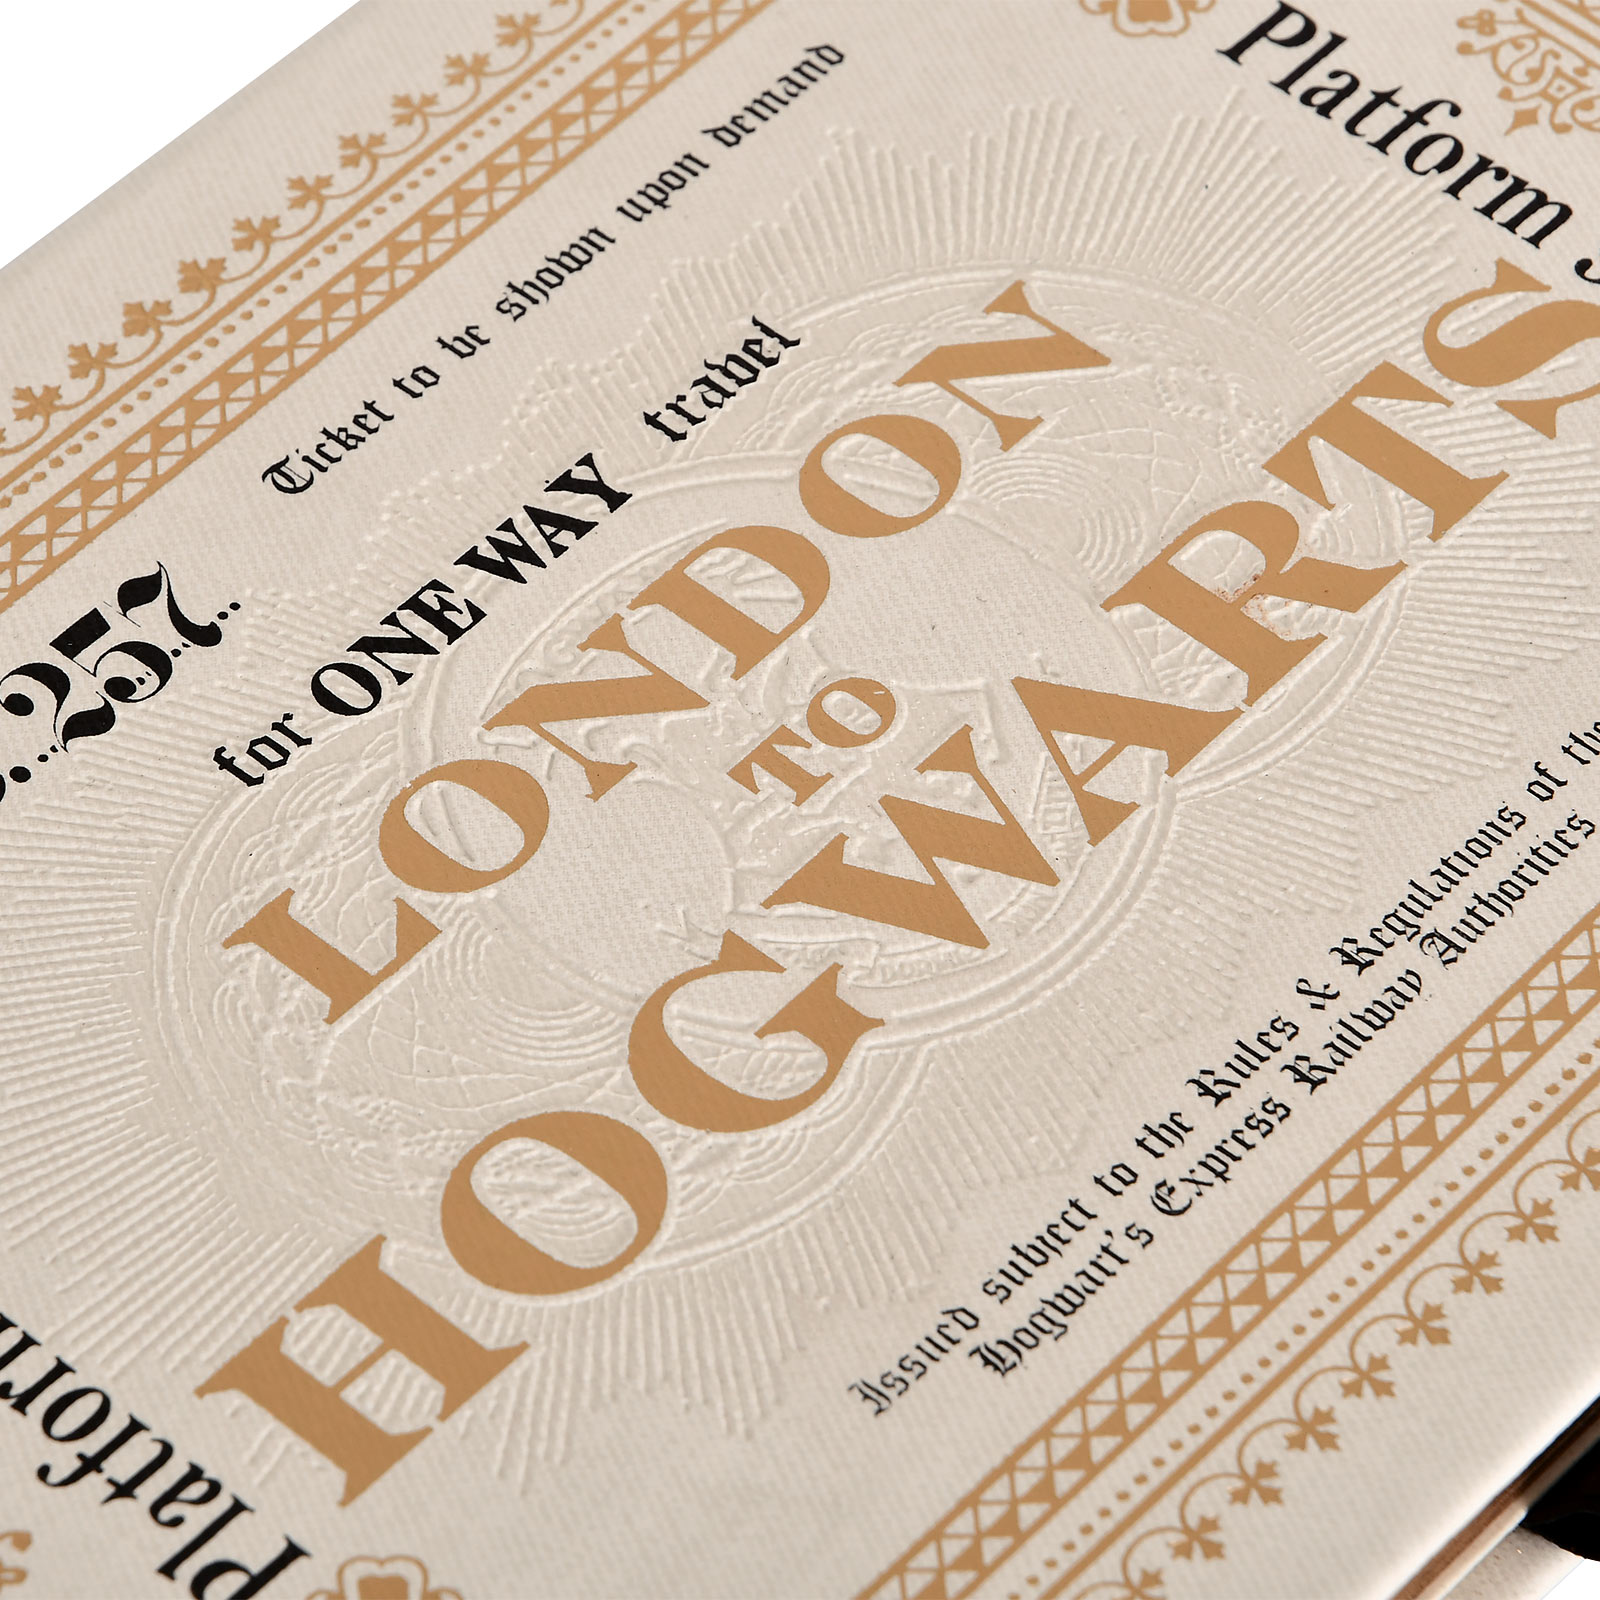 Harry Potter - Hogwarts Express Ticket Premium Notizbuch A5